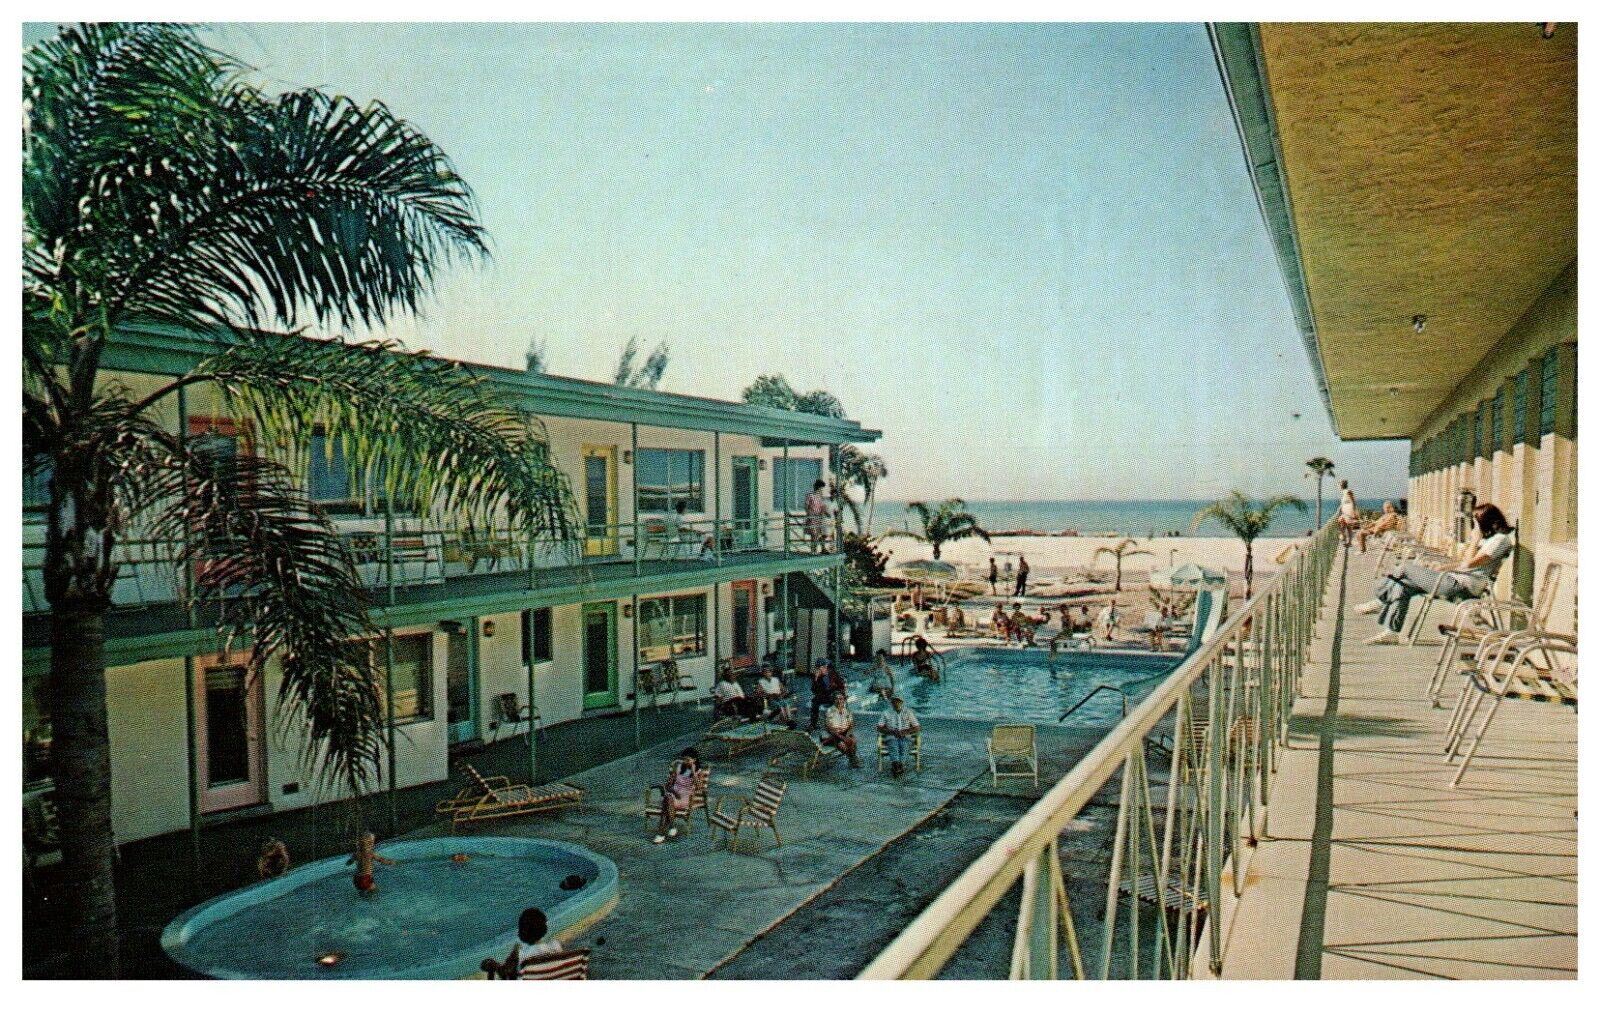 Tahitian-Imperial Motels Treasure Island, FL Hotel Motel Advertising POSTCARD